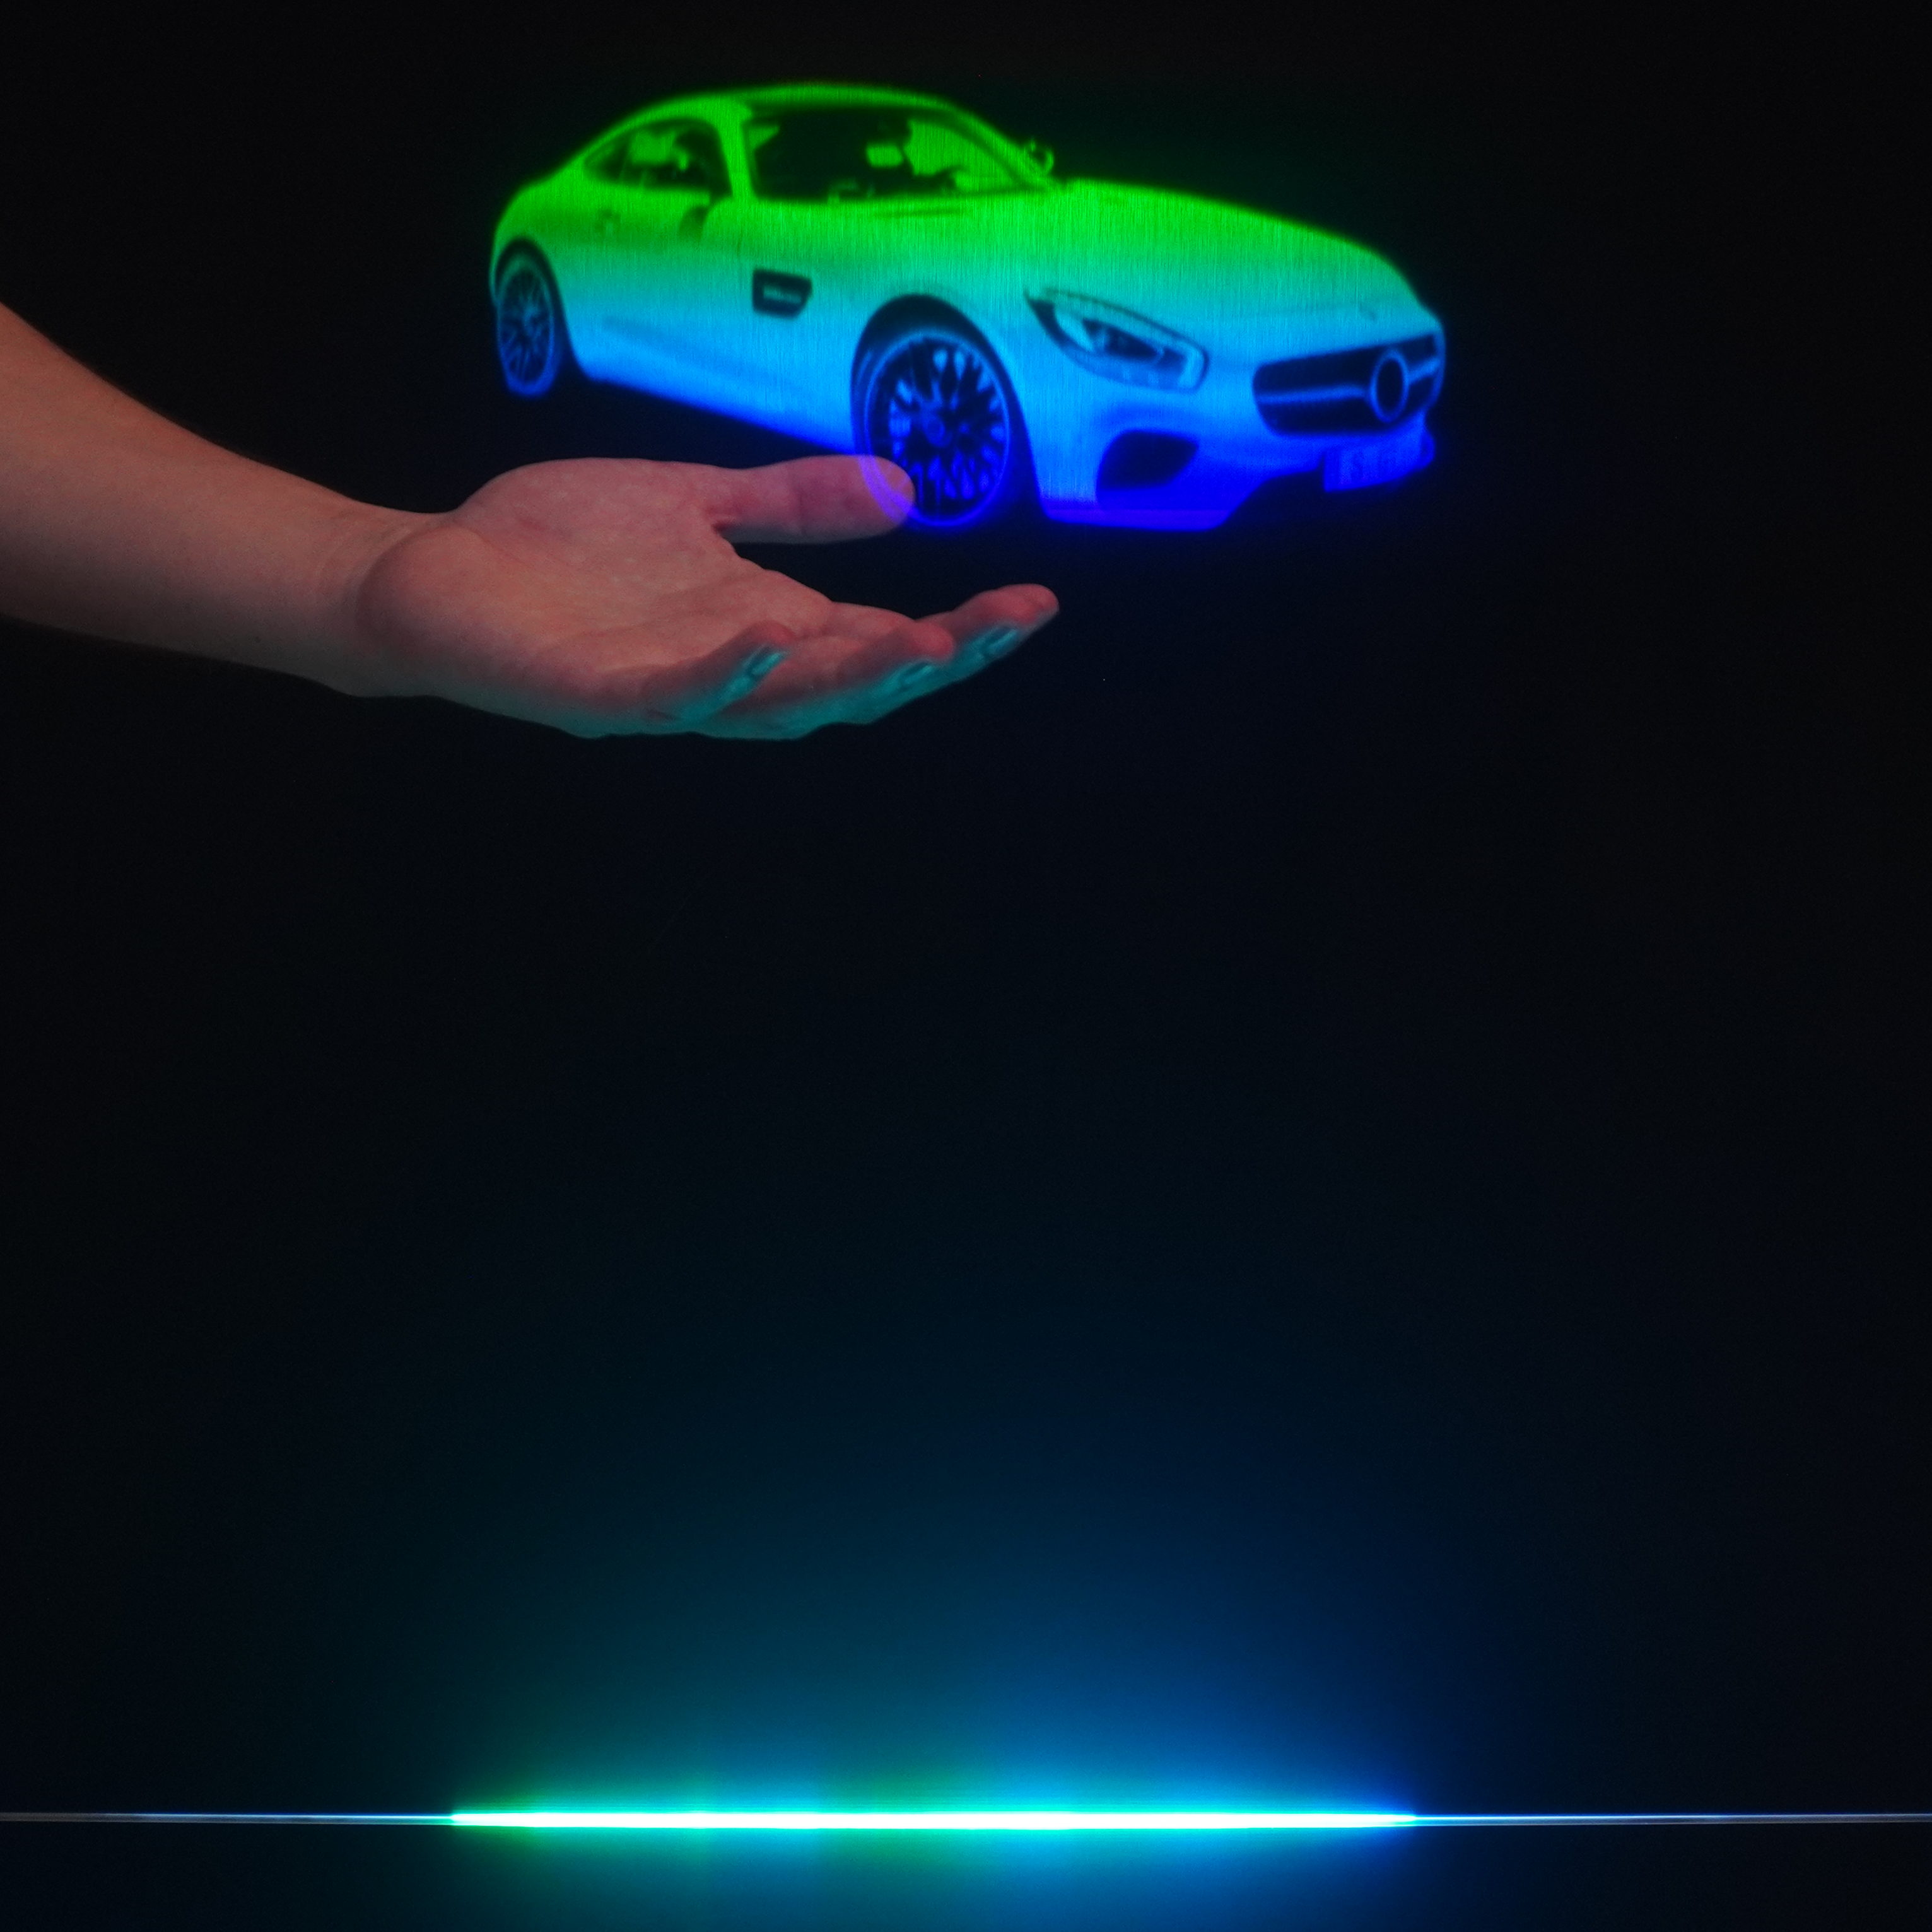 Hologram-like image of a car